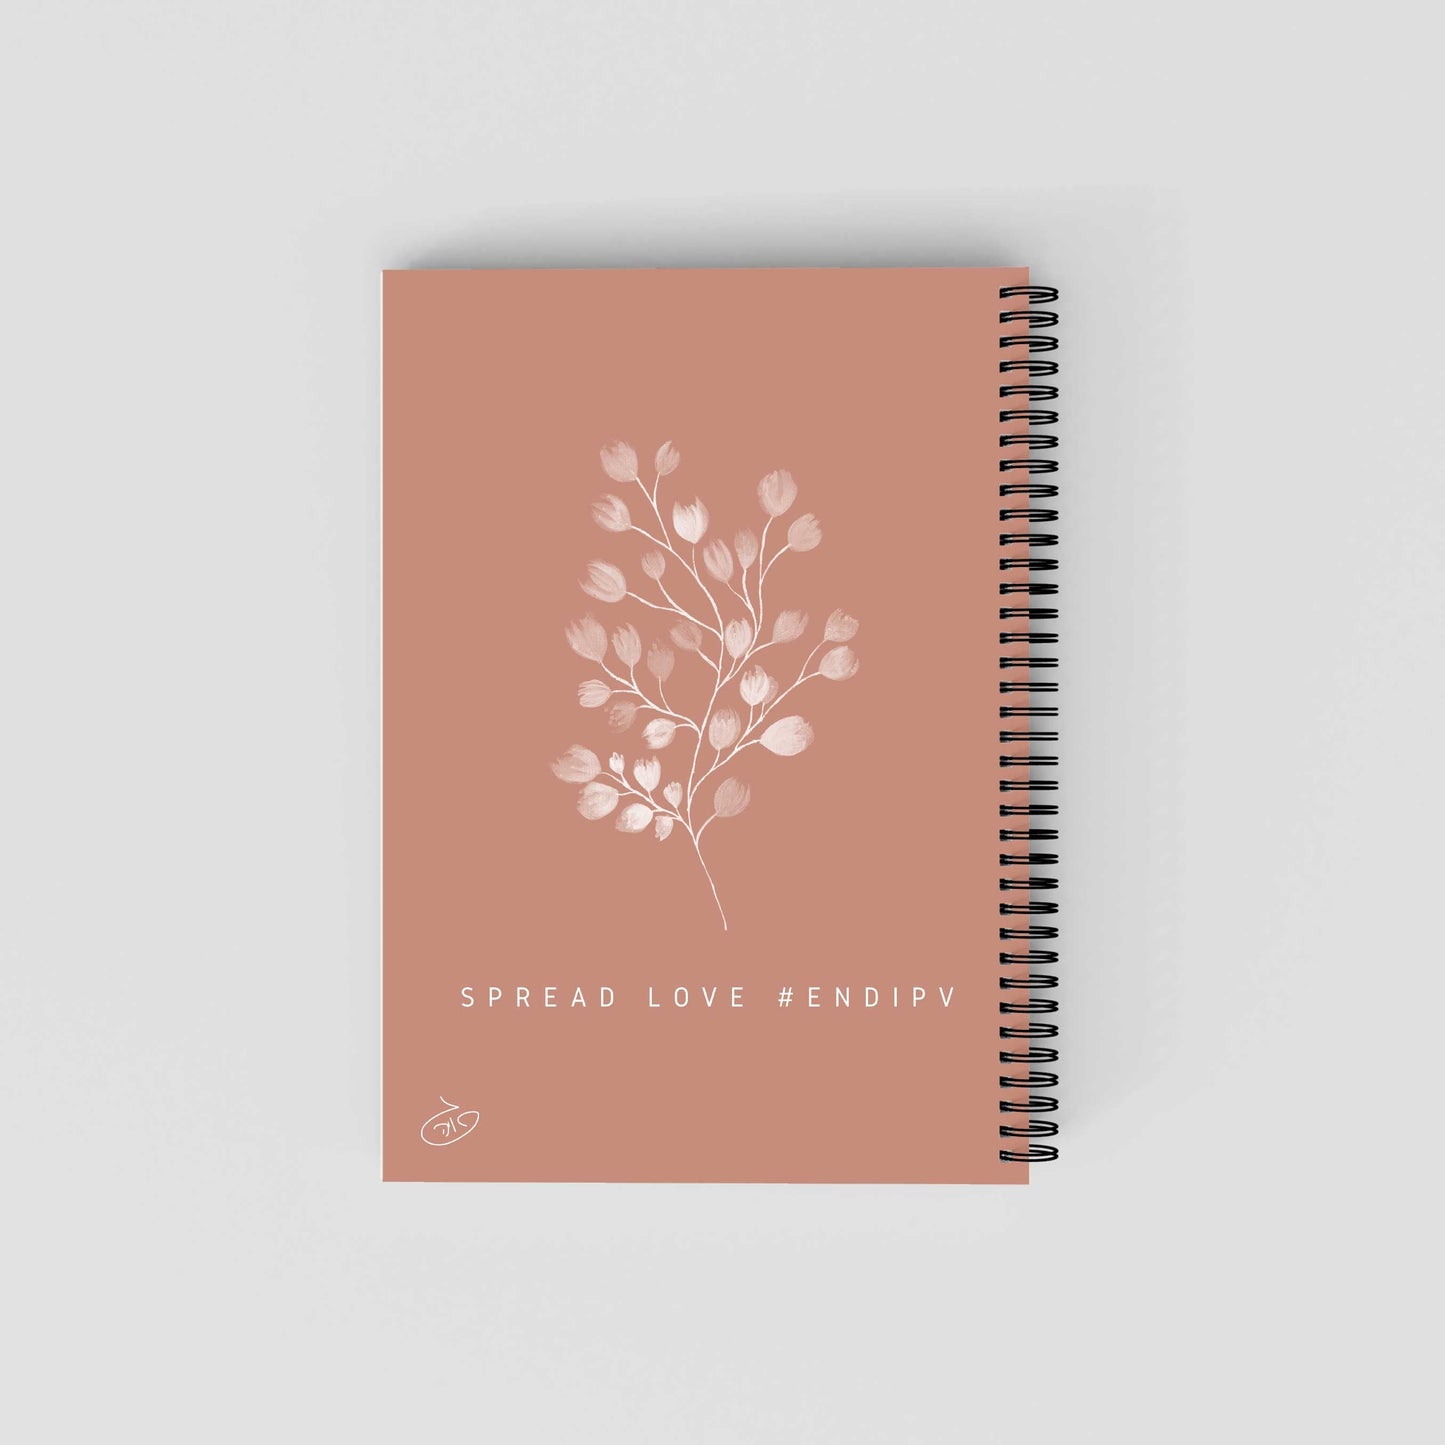 Branches Notebook | Gaya's Drawing | מחברת ספירלה עם הציורים של גאיה